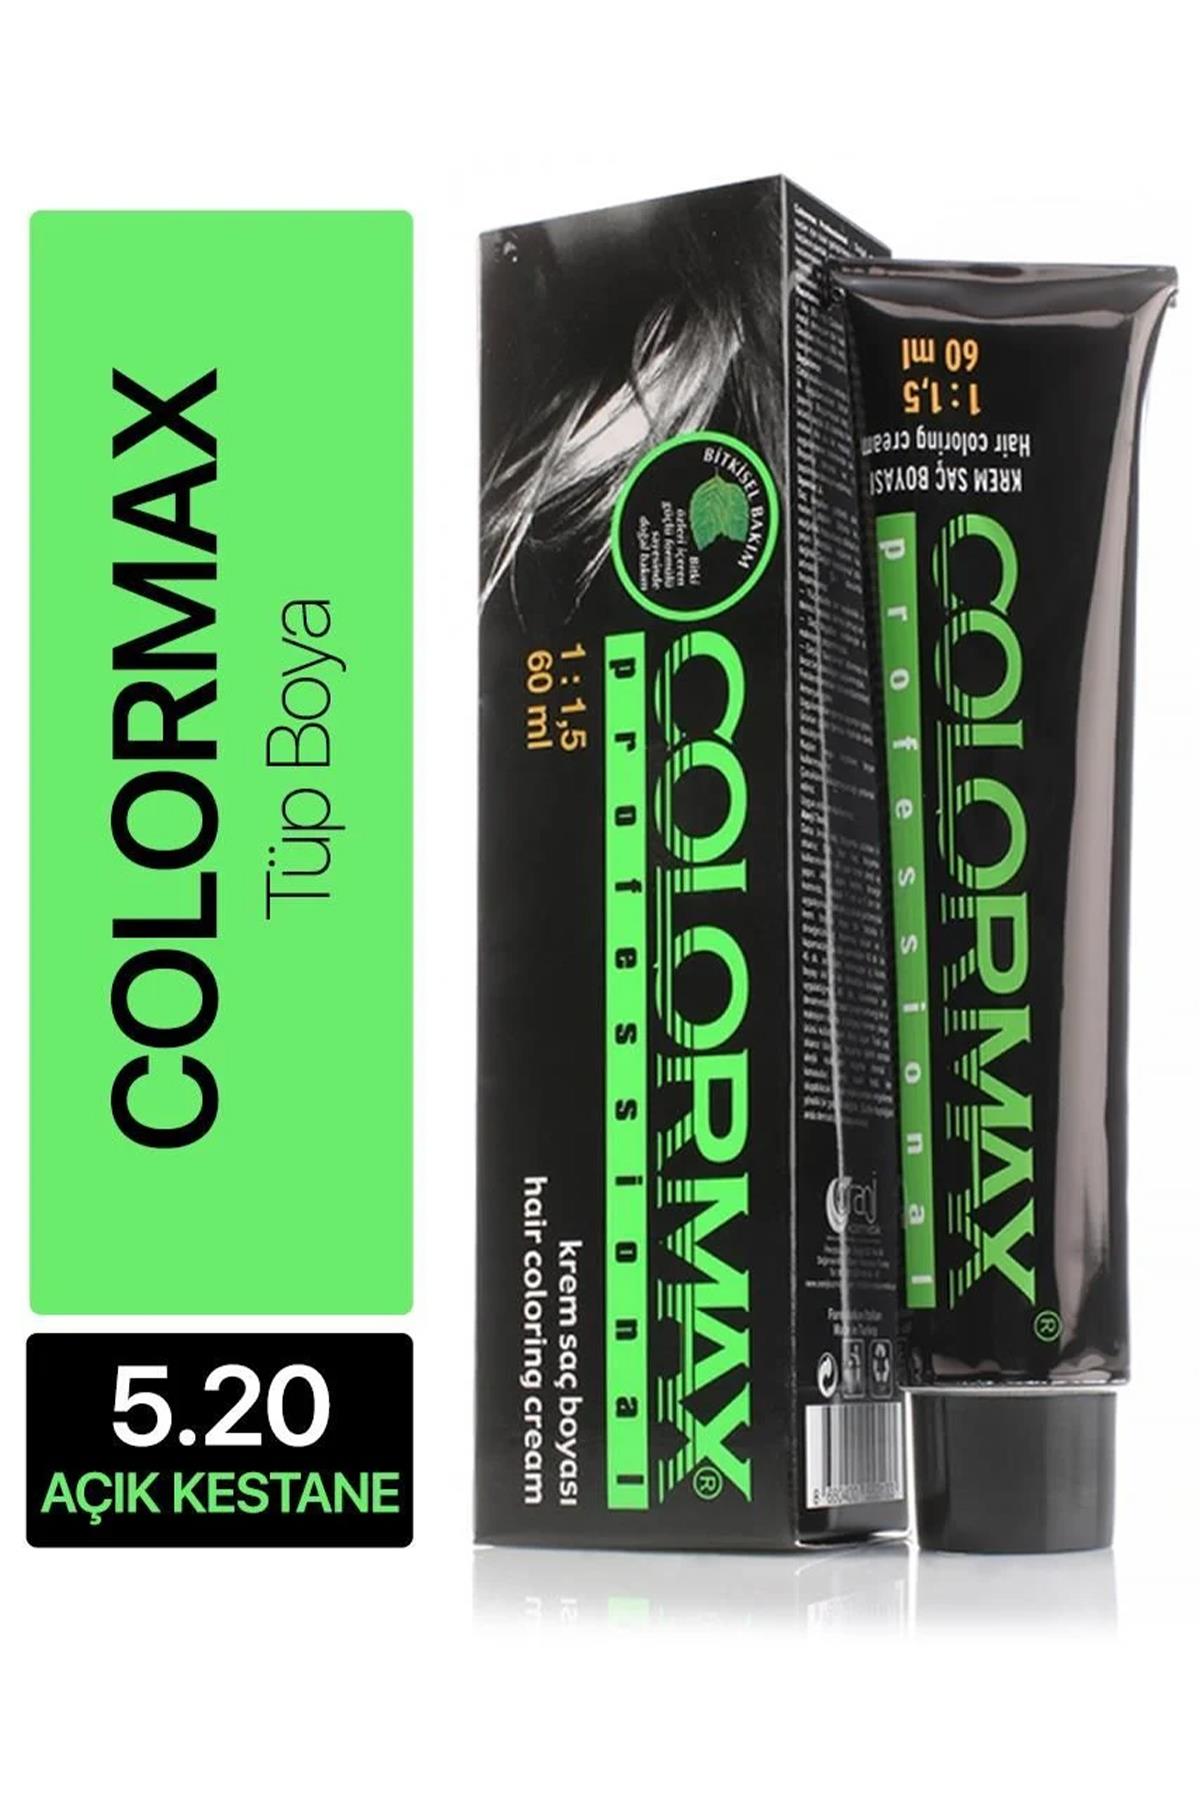 colormax-tup-sac-boyasi-no-5-20-acik-kestane-60-ml-7894-1.jpg